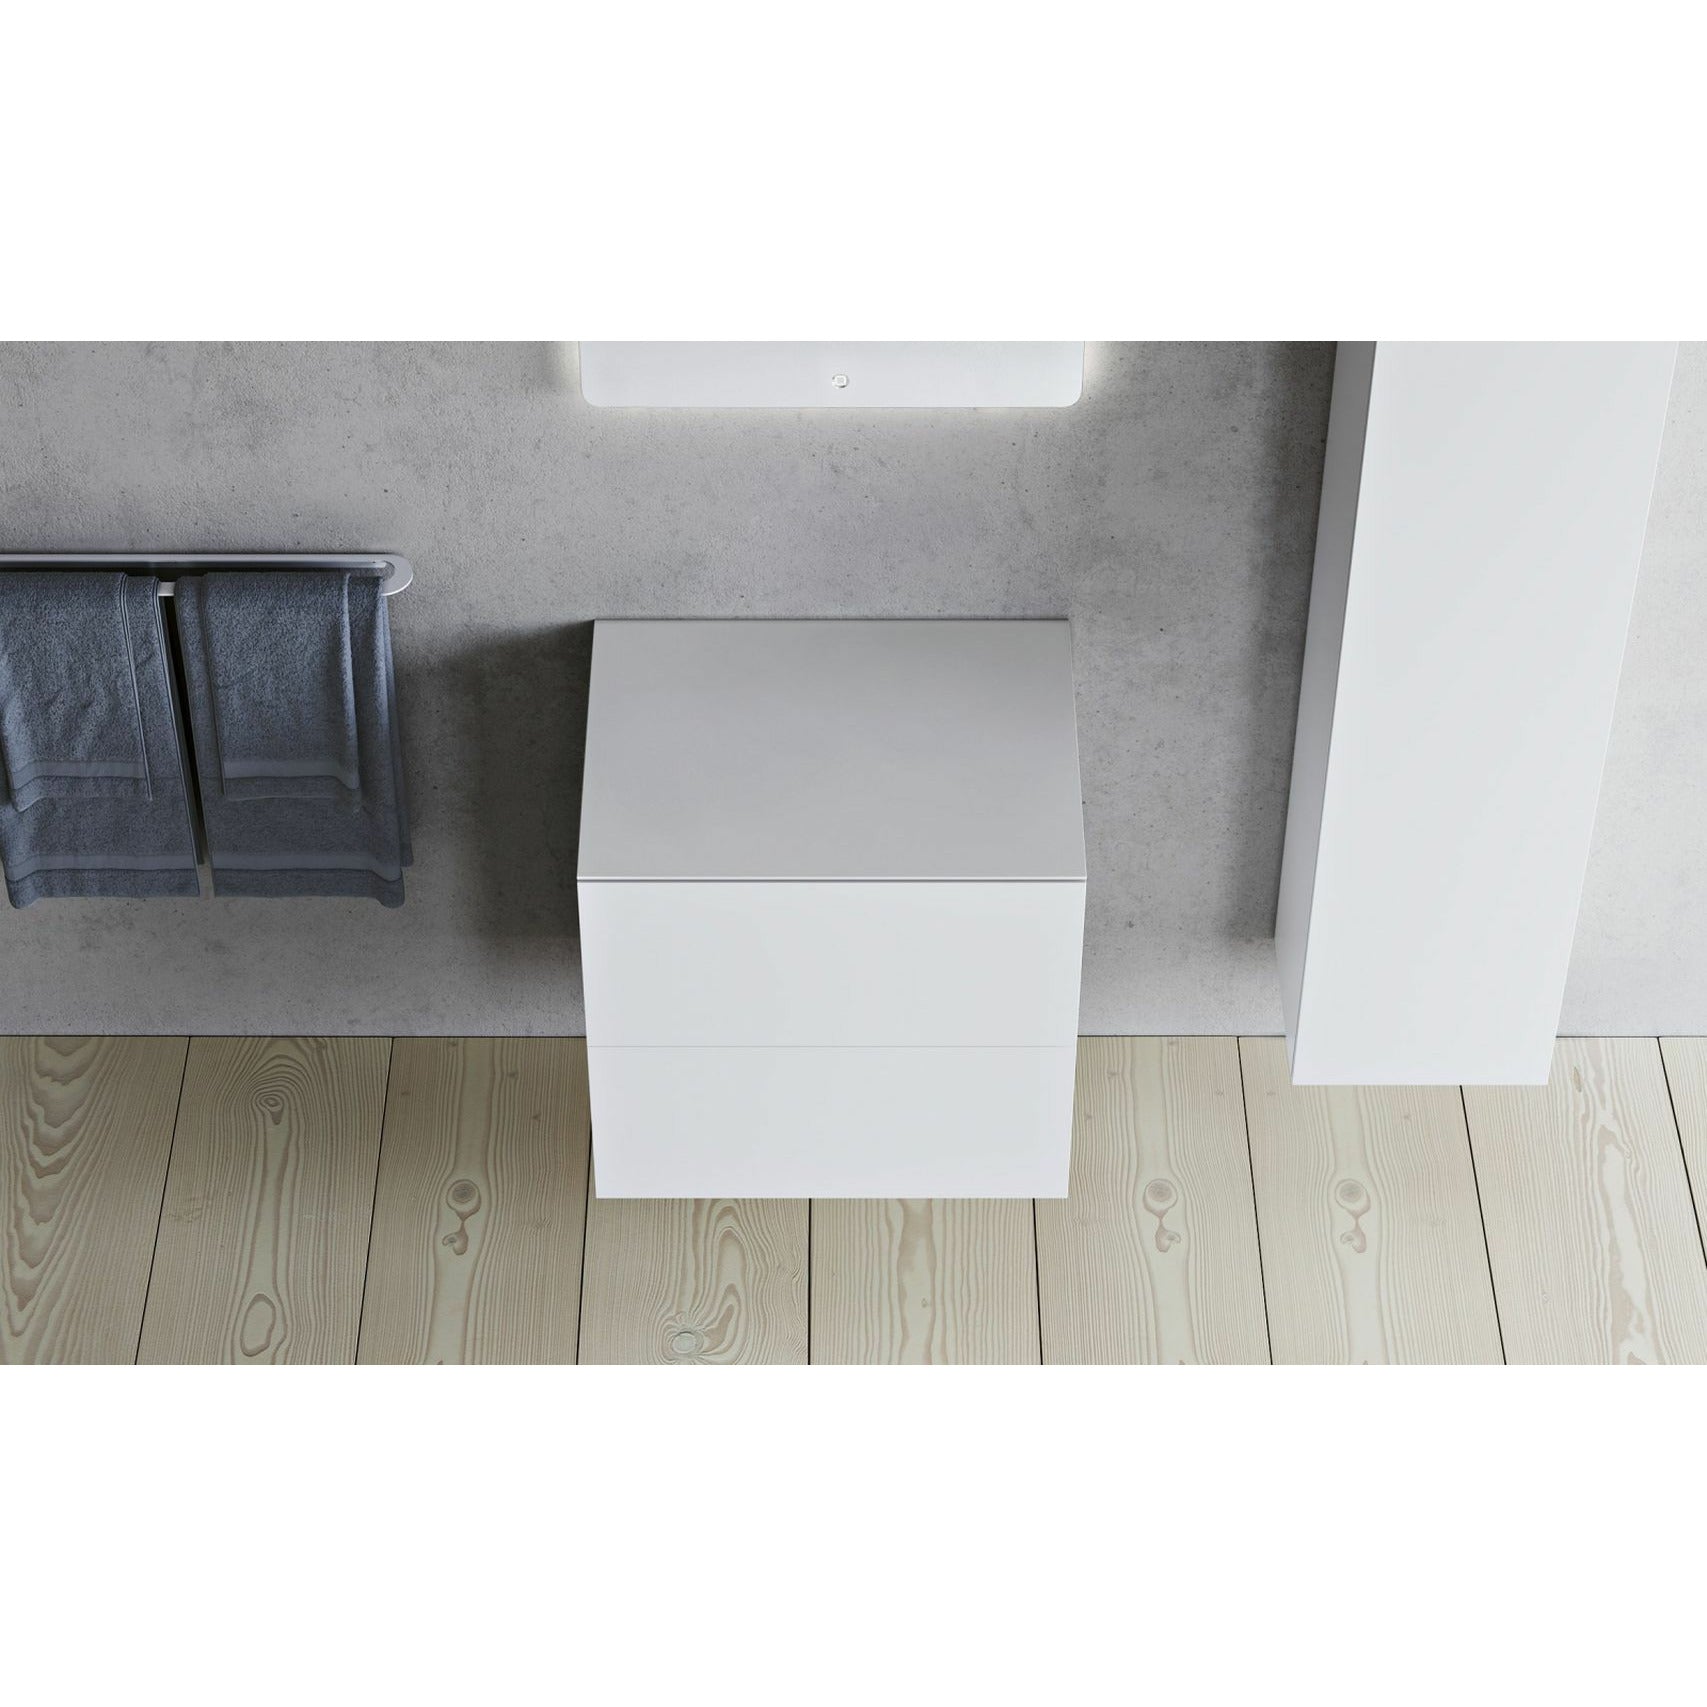 Copenhagen Bath Sq2 Double Cabinet With Countertop, L60 Cm